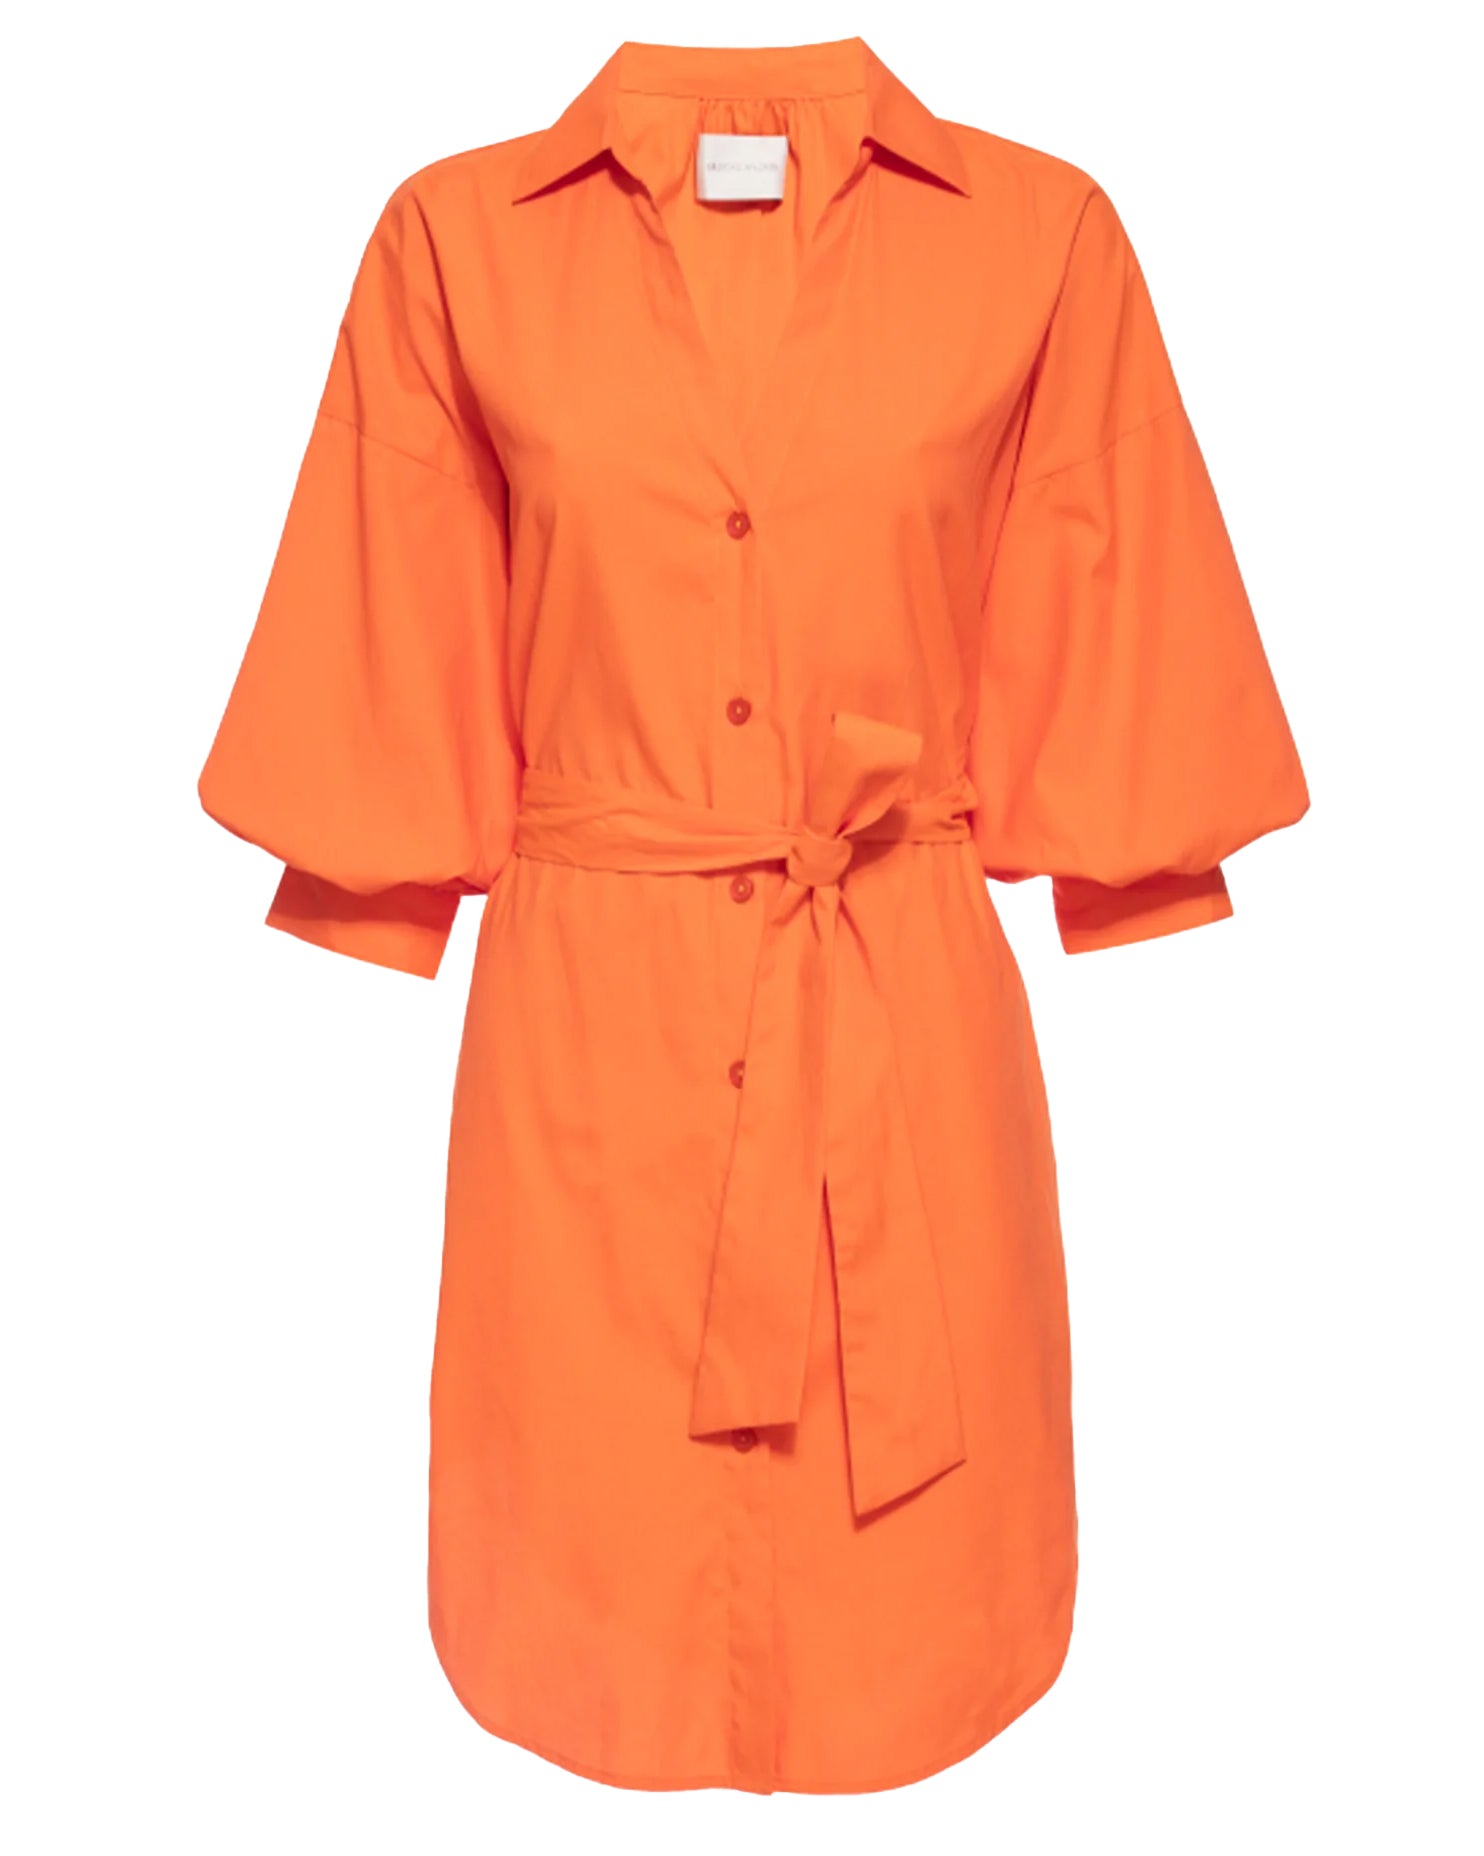 Kate Belted Dress (Tangerine)